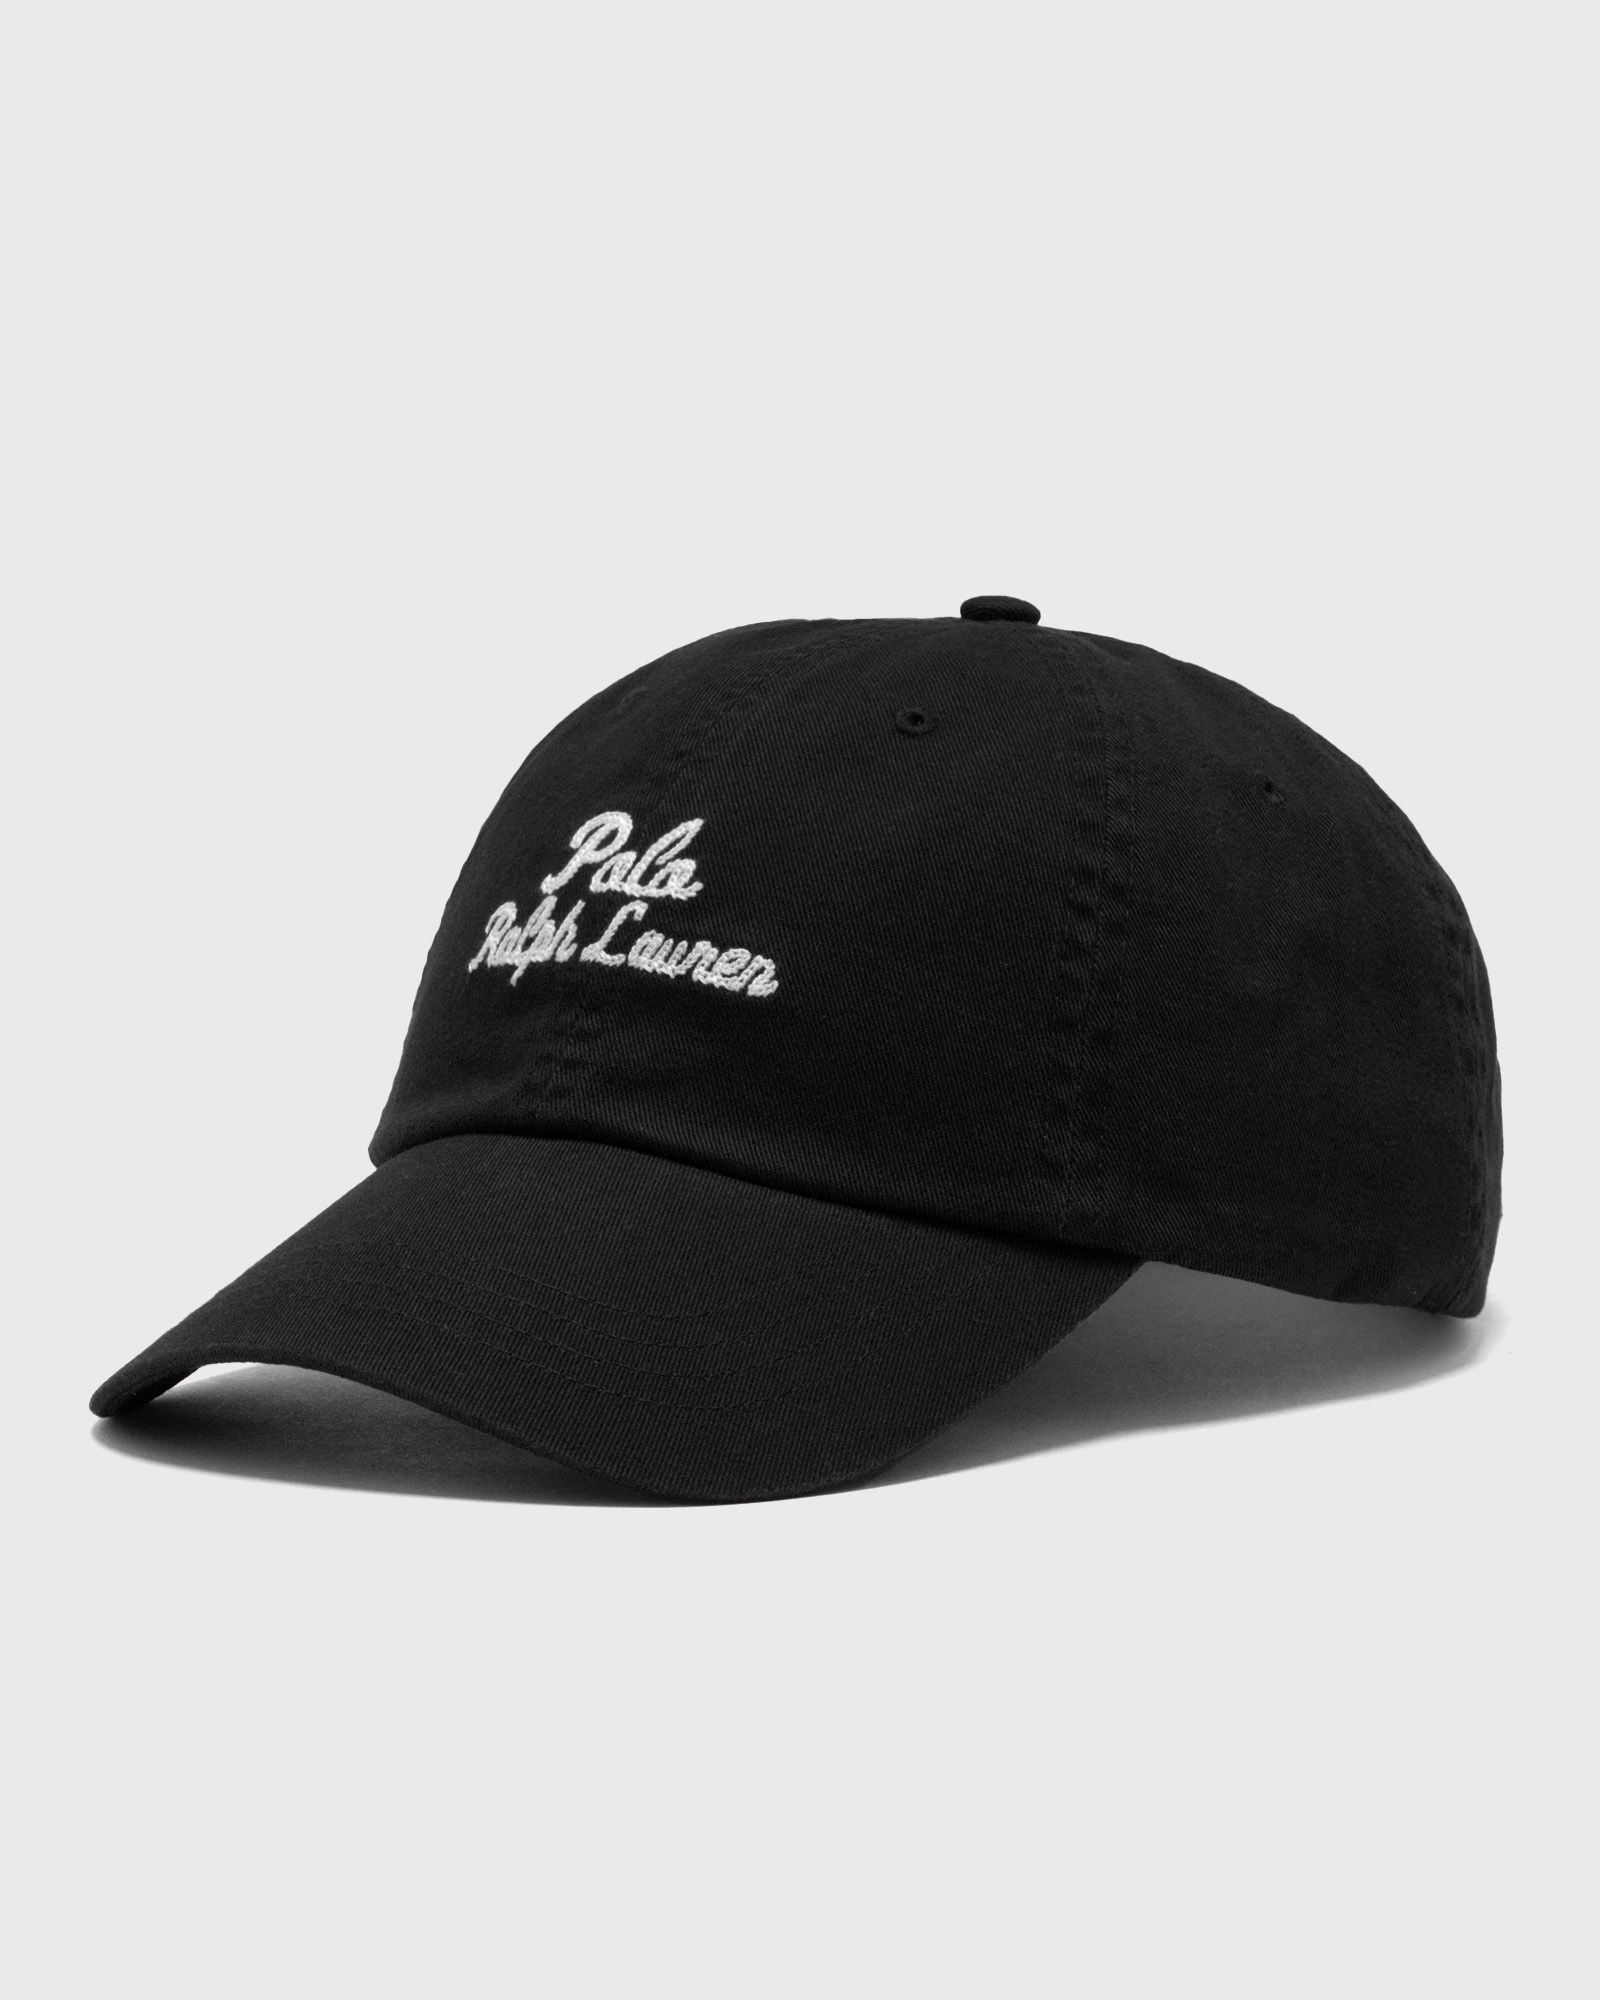 Polo Ralph Lauren - cls sprt cap-cap-hat men caps black in größe:one size